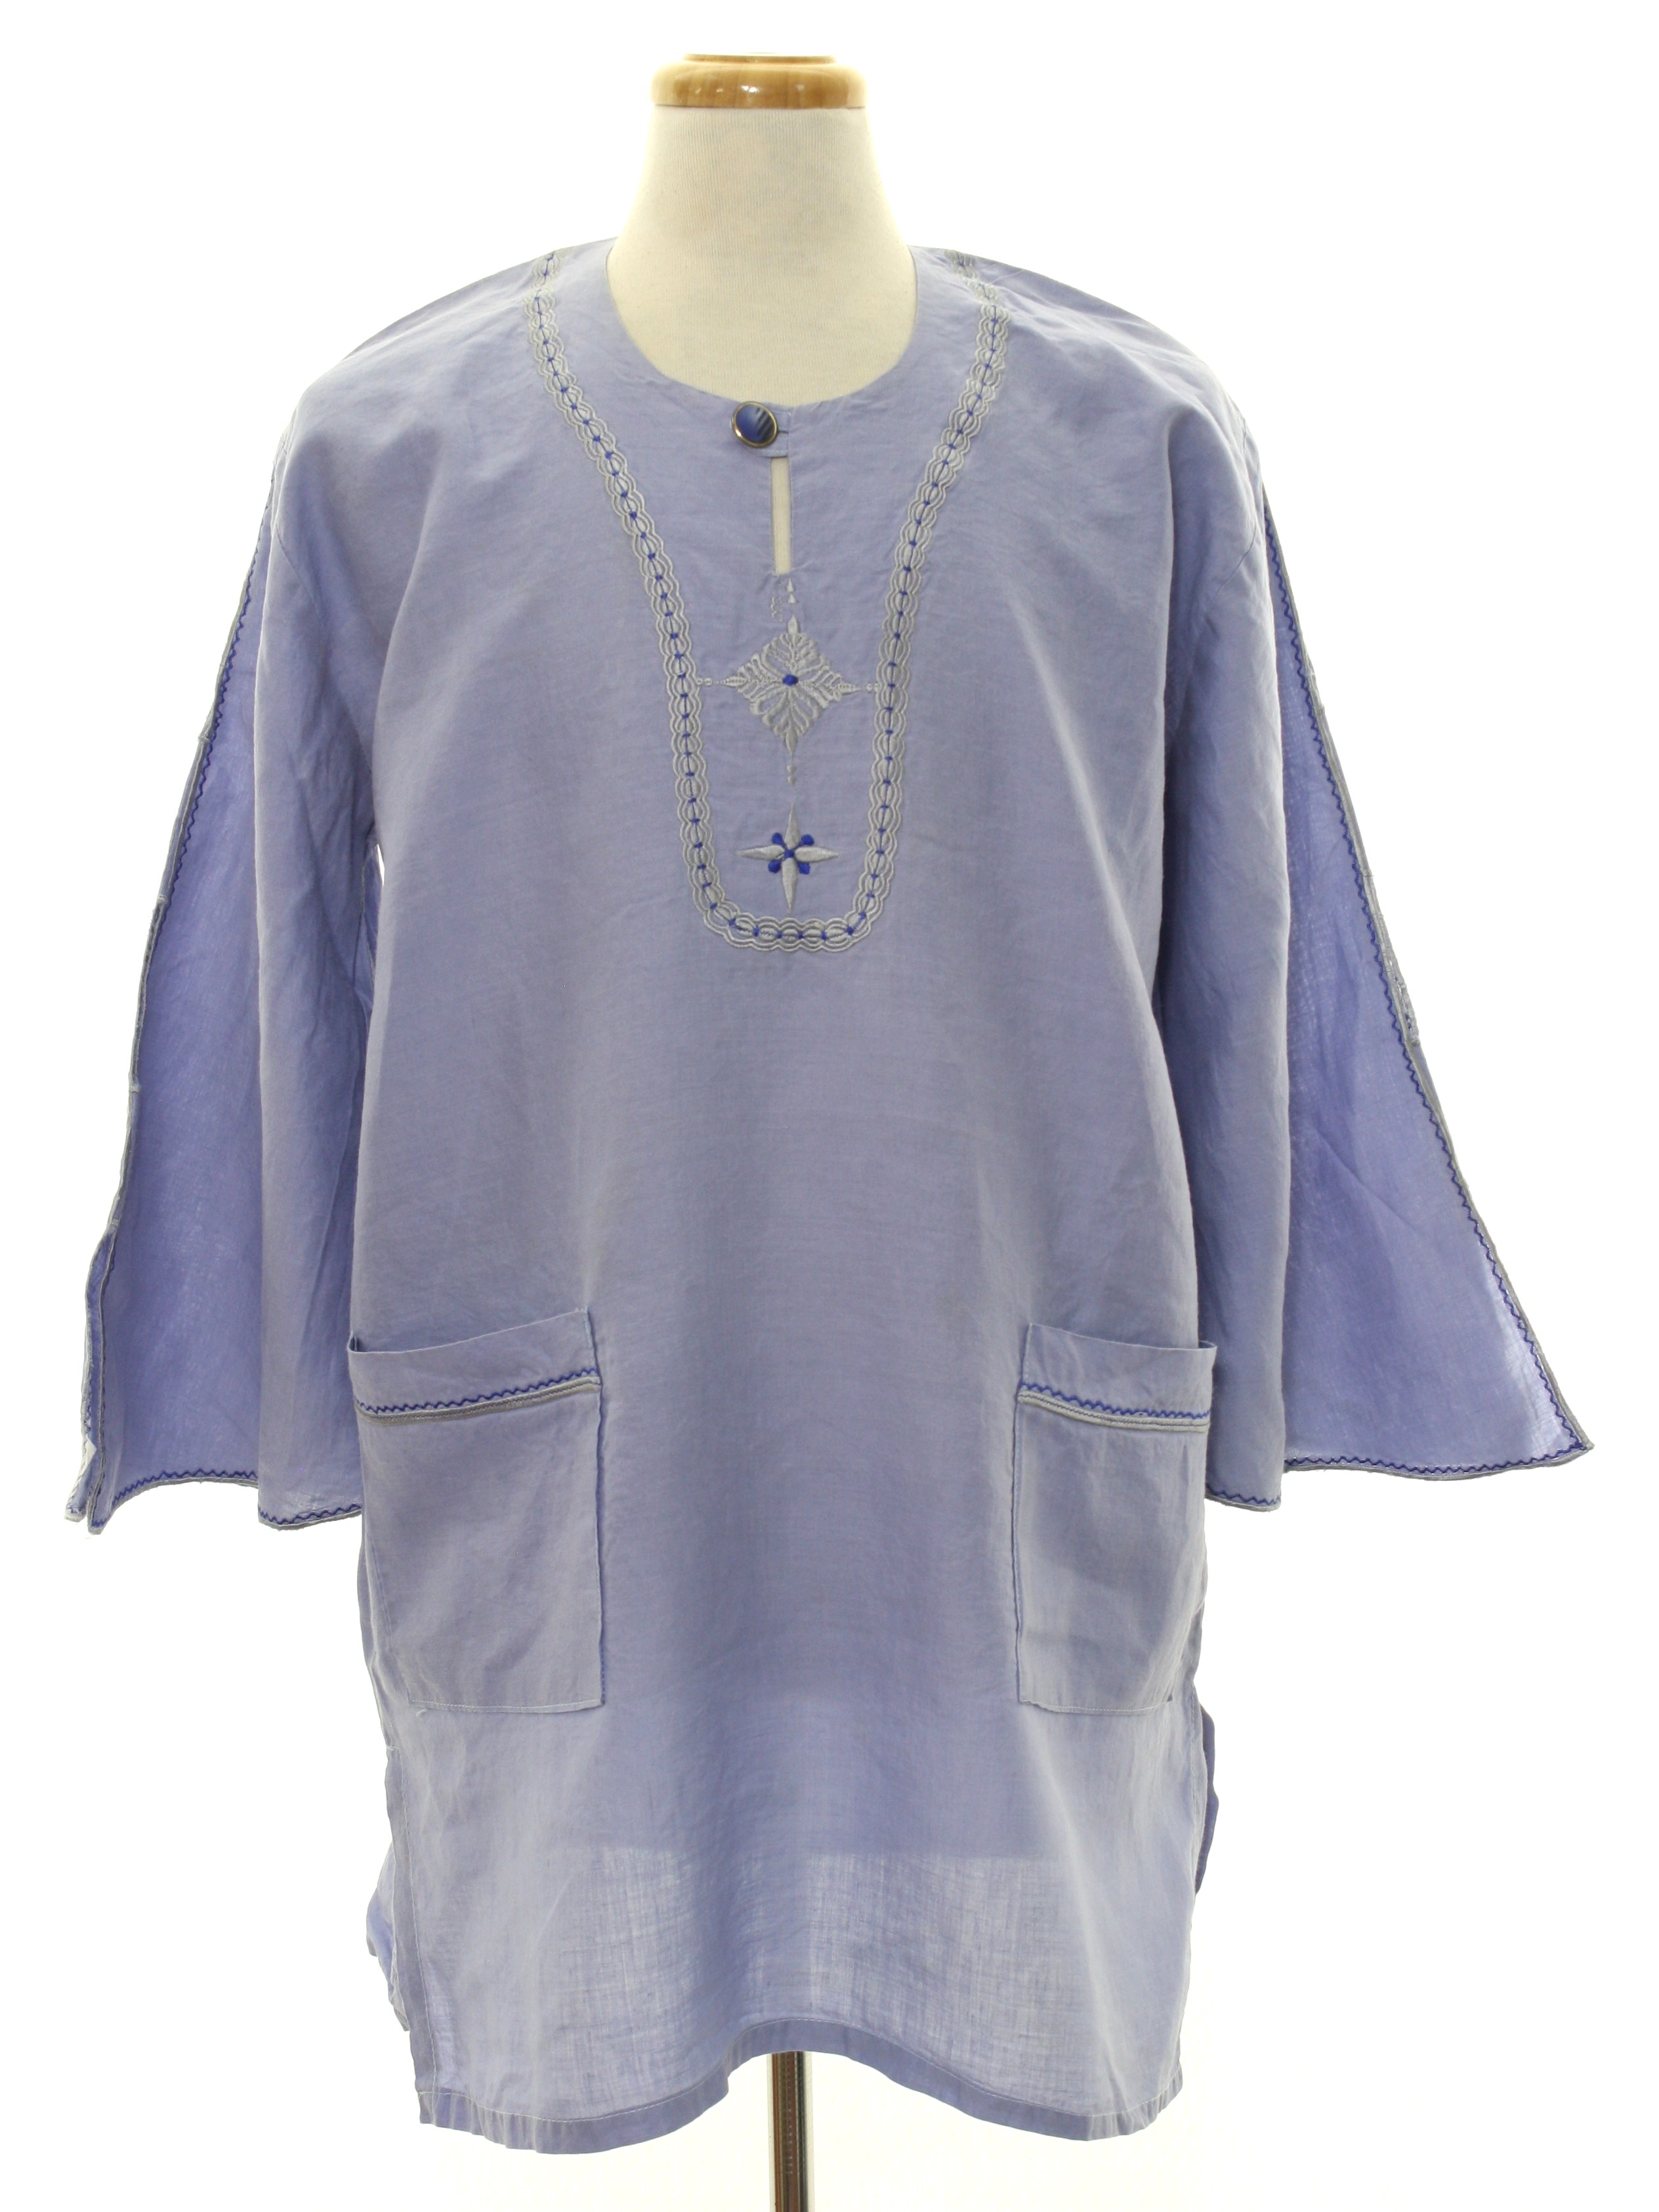 Hippie Shirt: 90s -Missing Label- Mens light blue background cotton ...